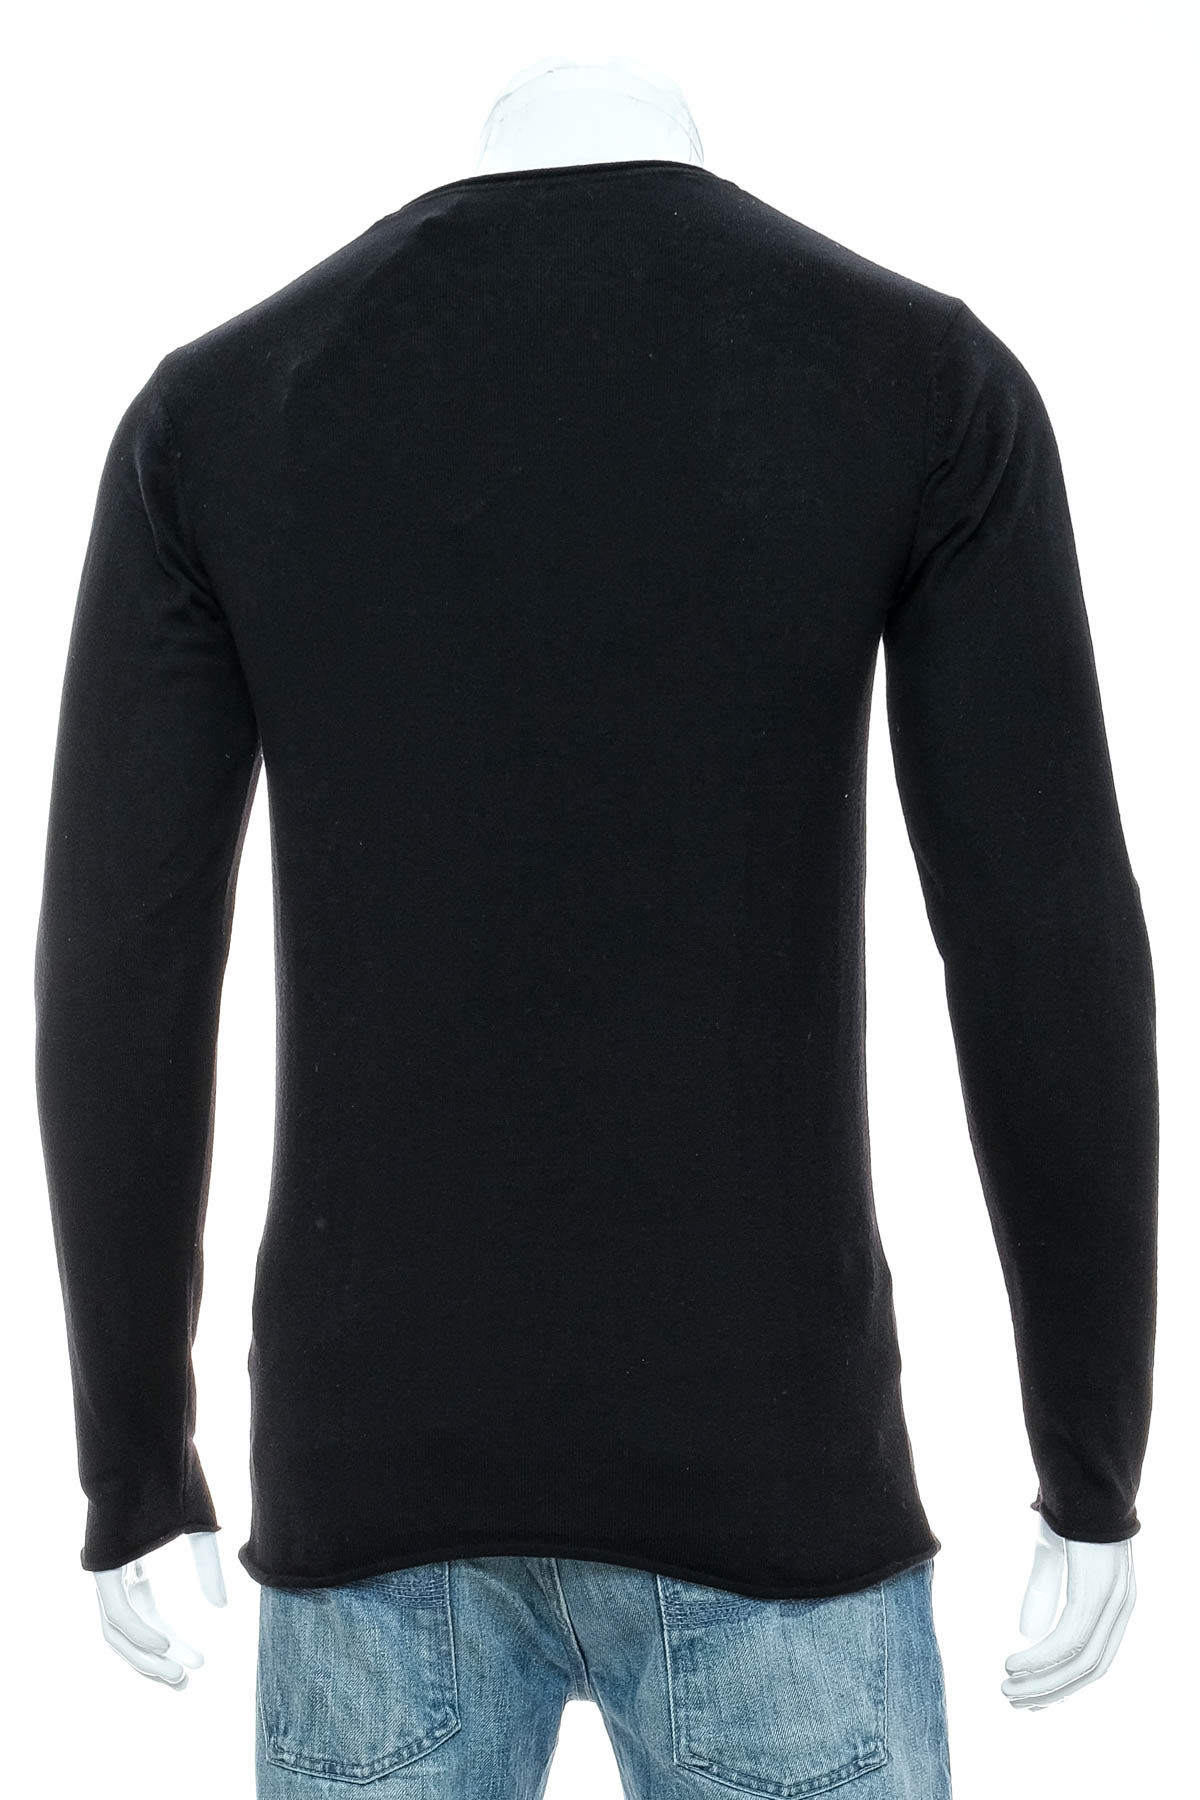 Men's sweater - Recolution - 1